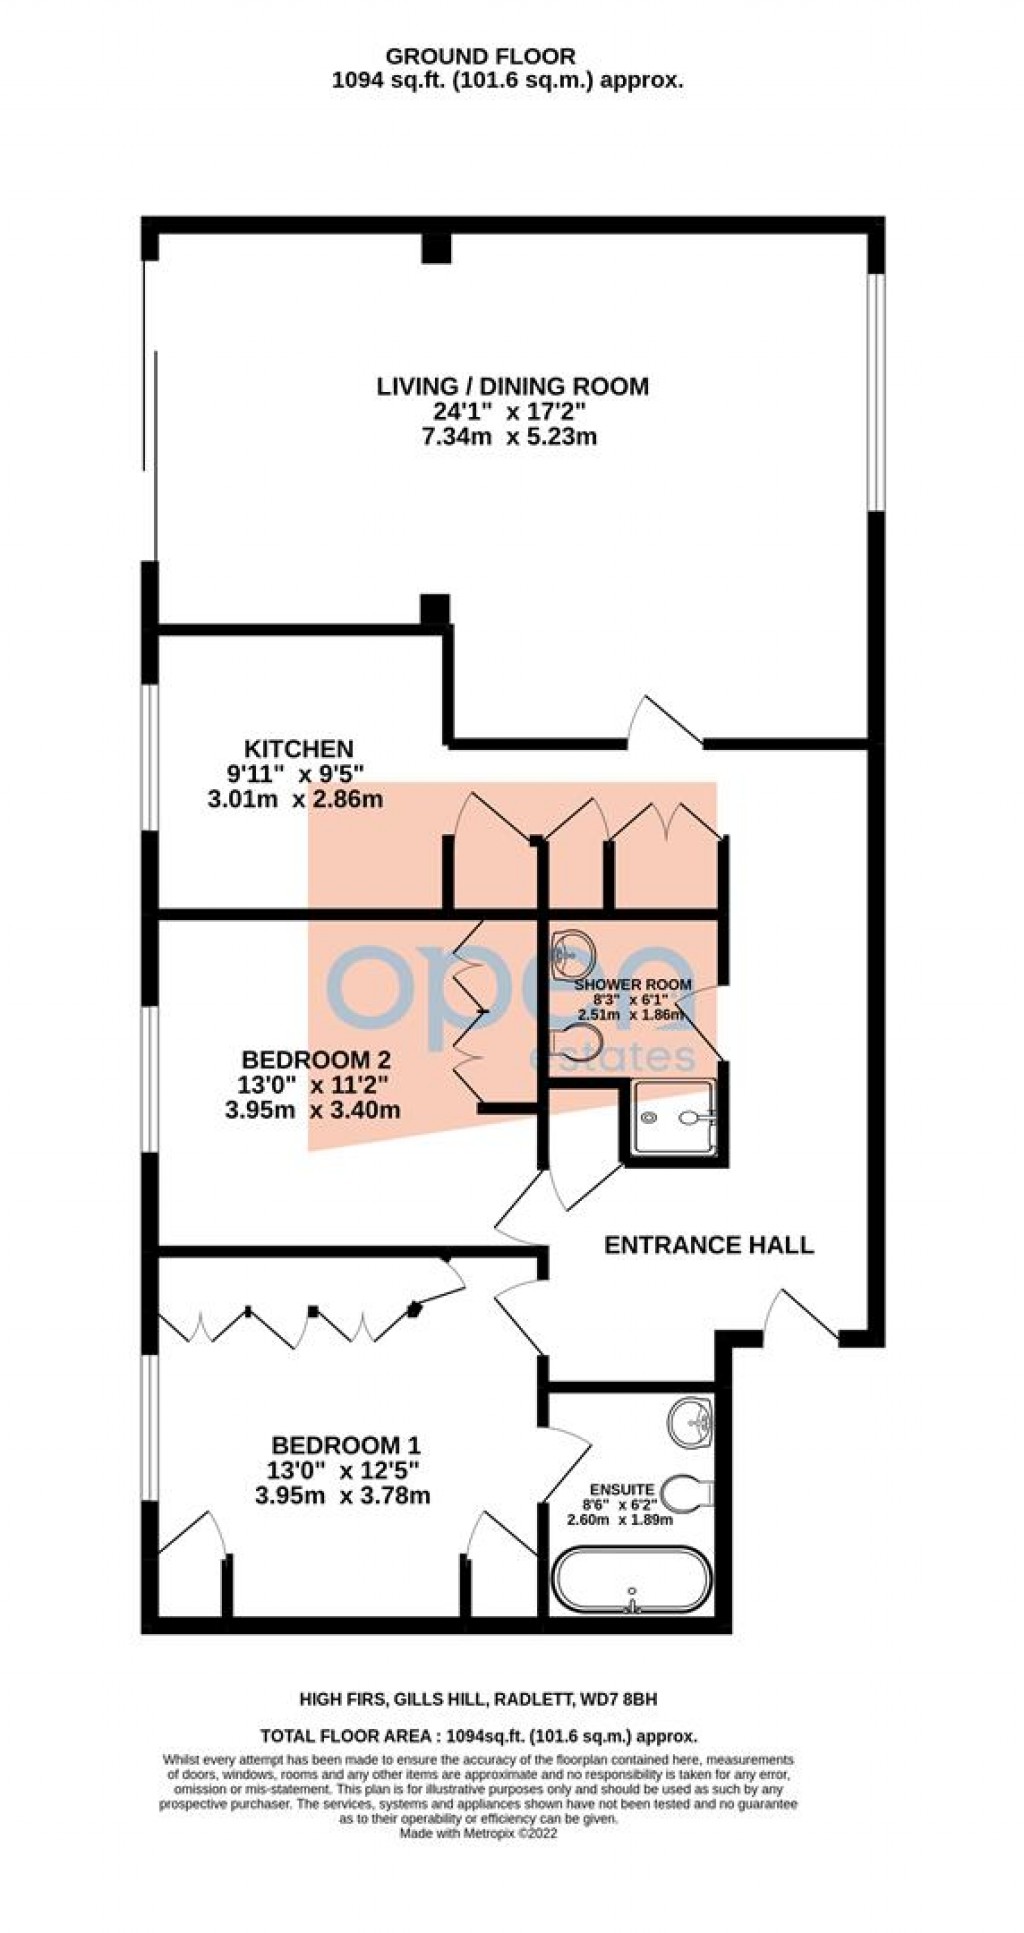 Floorplans For High Firs, Gills Hill, Radlett